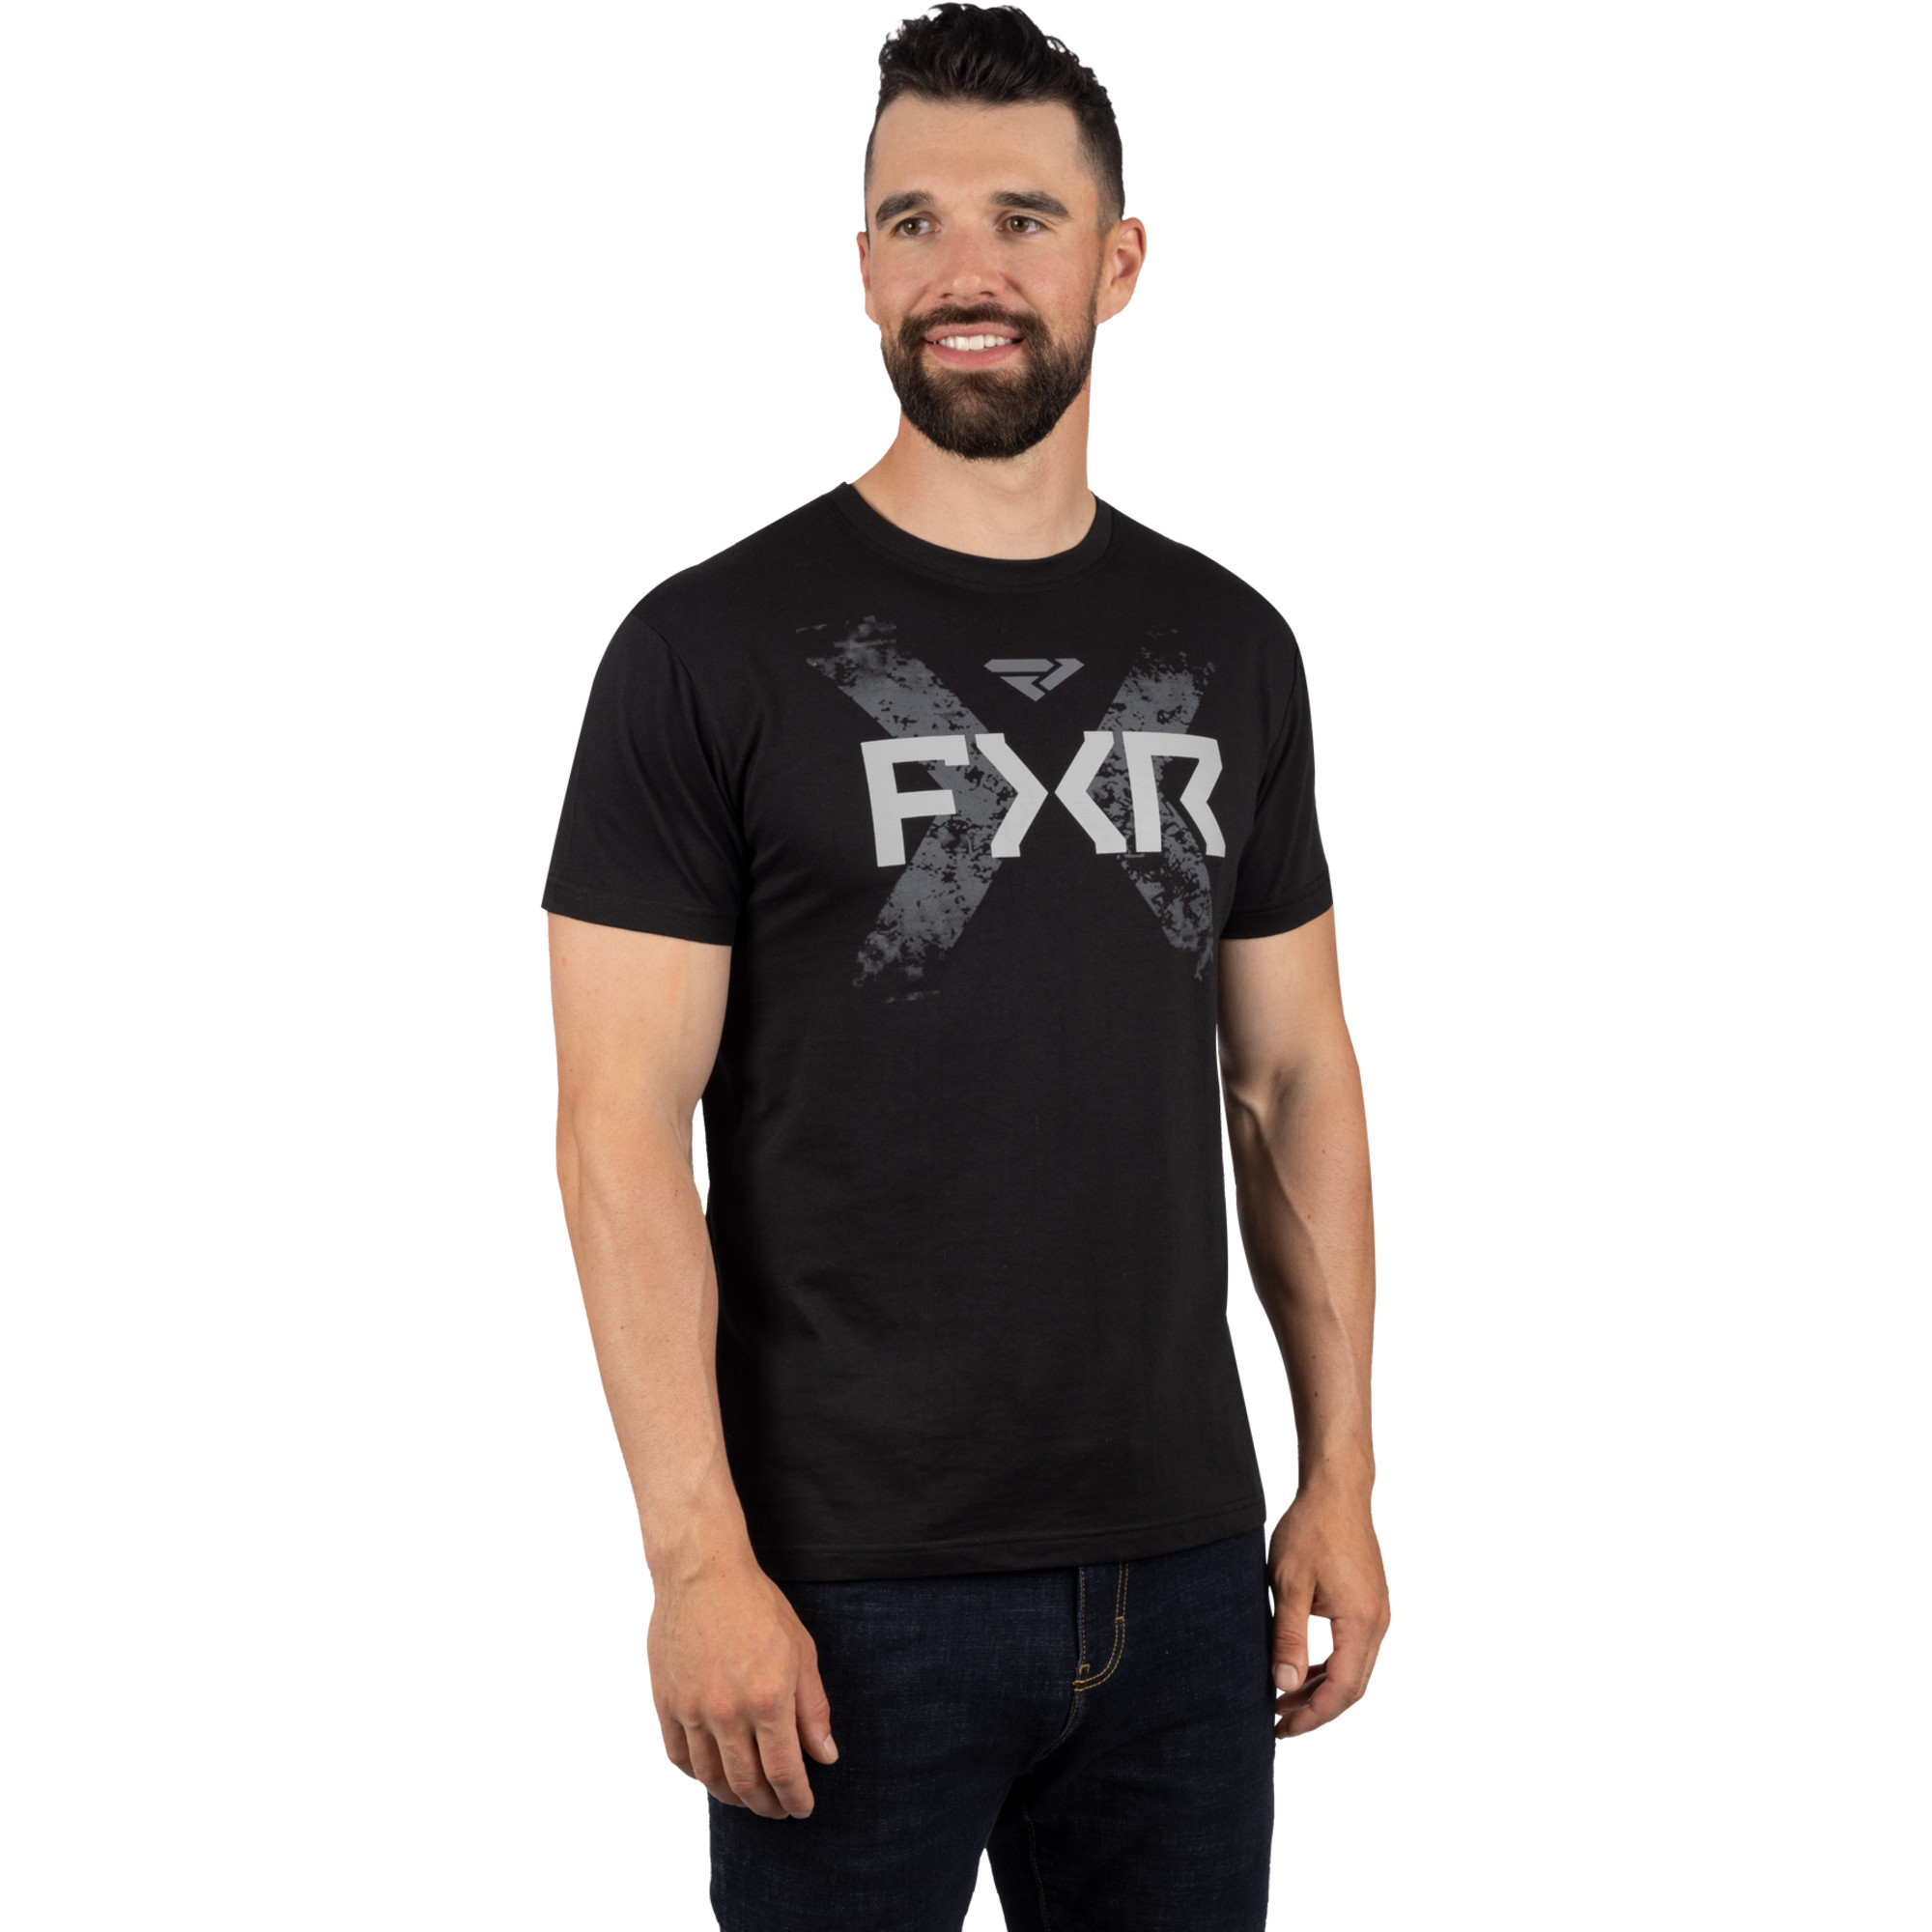 fxr racing t-shirt shirts for men victory premium